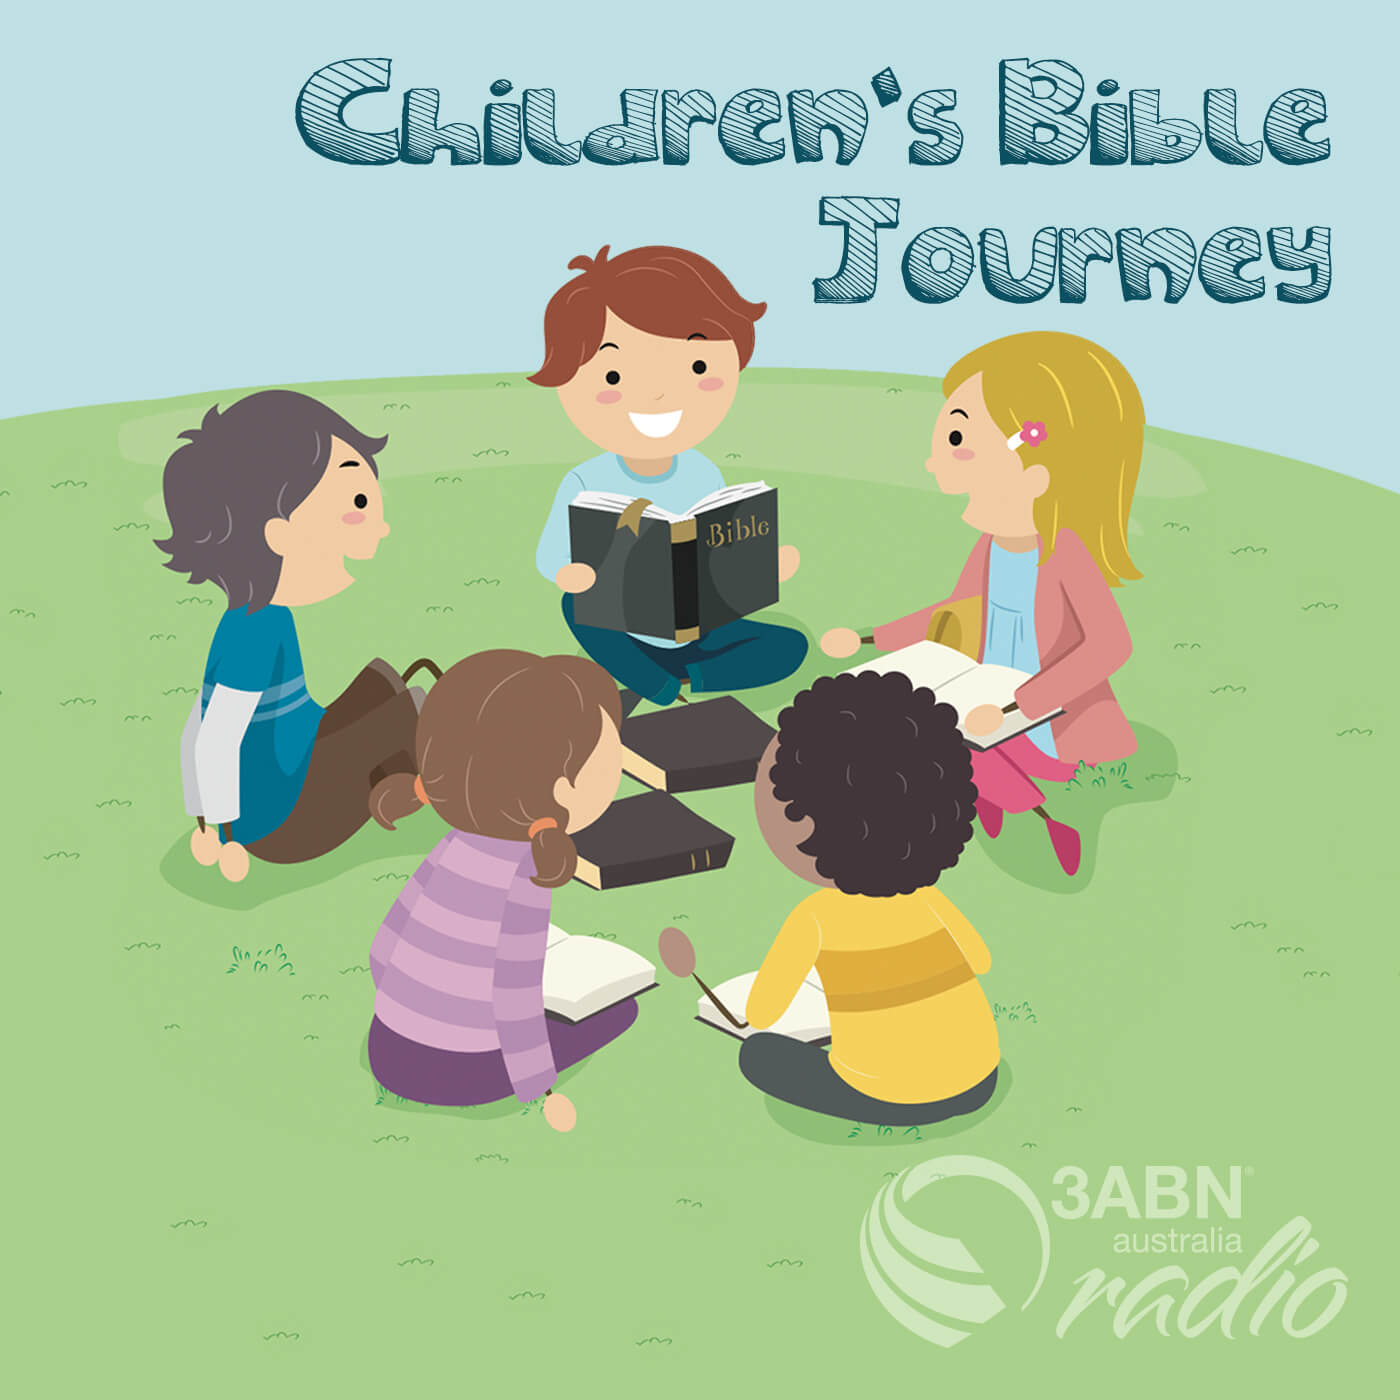 Children's Bible Journey - 2031